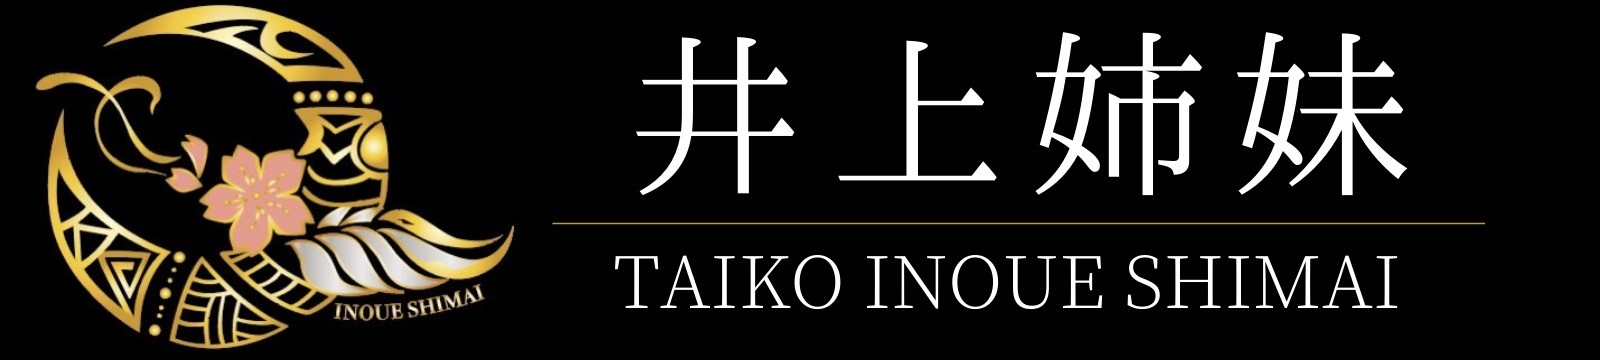 和太鼓 井上姉妹 Official Site / TAIKO INOUE SHIMAI